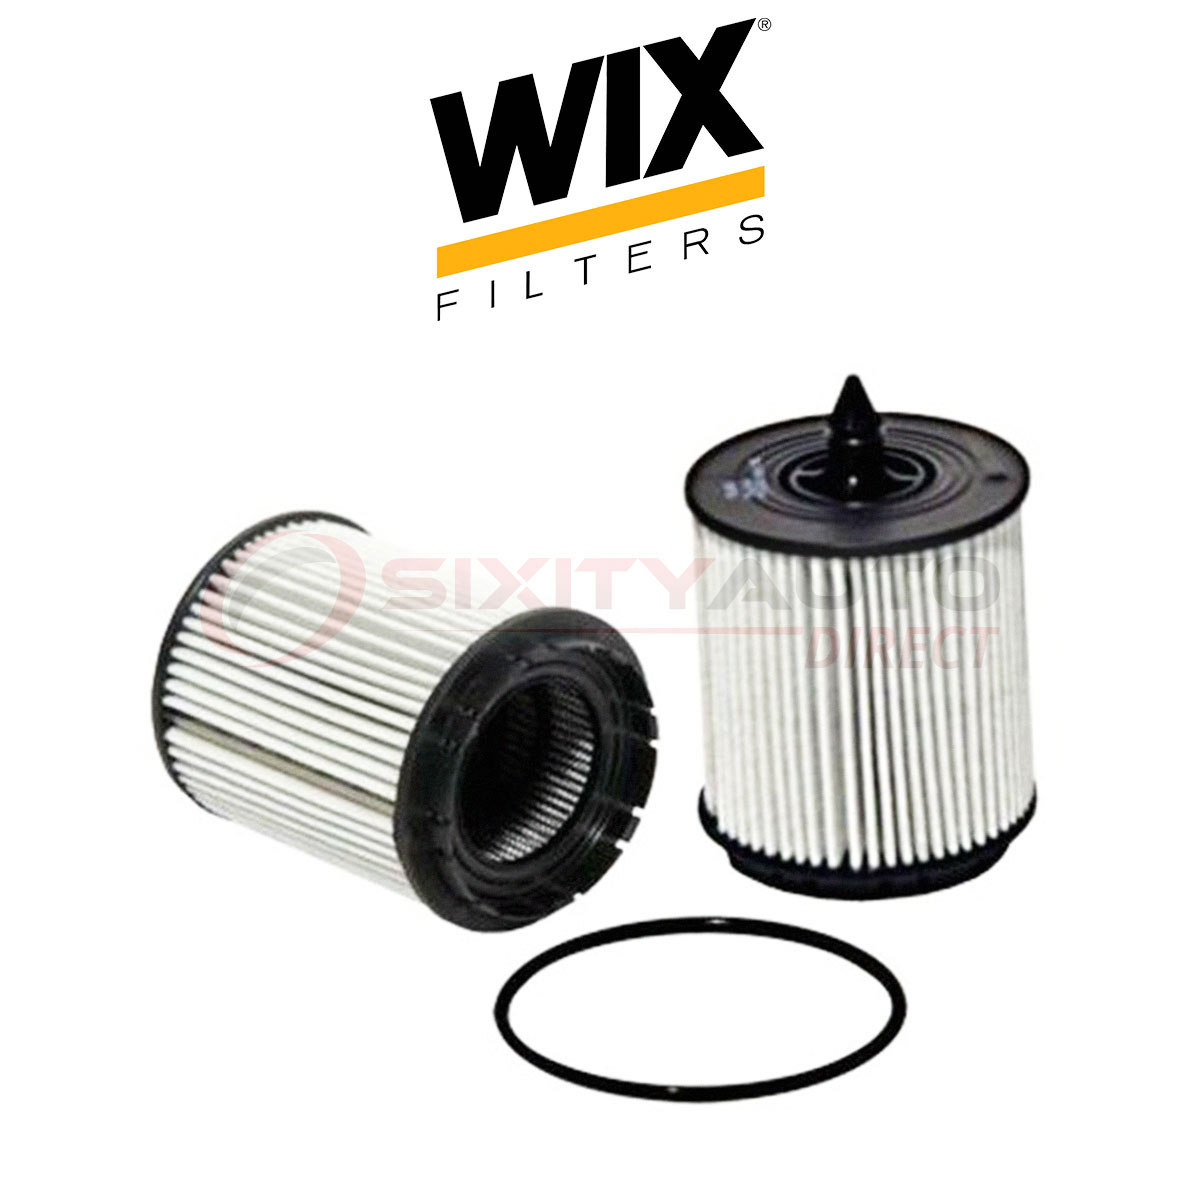 WIX Engine Oil Filter for 2002-2005 Pontiac Grand Am 2.2L L4 - Filtration gw | eBay 2003 Pontiac Grand Am Oil Filter Number